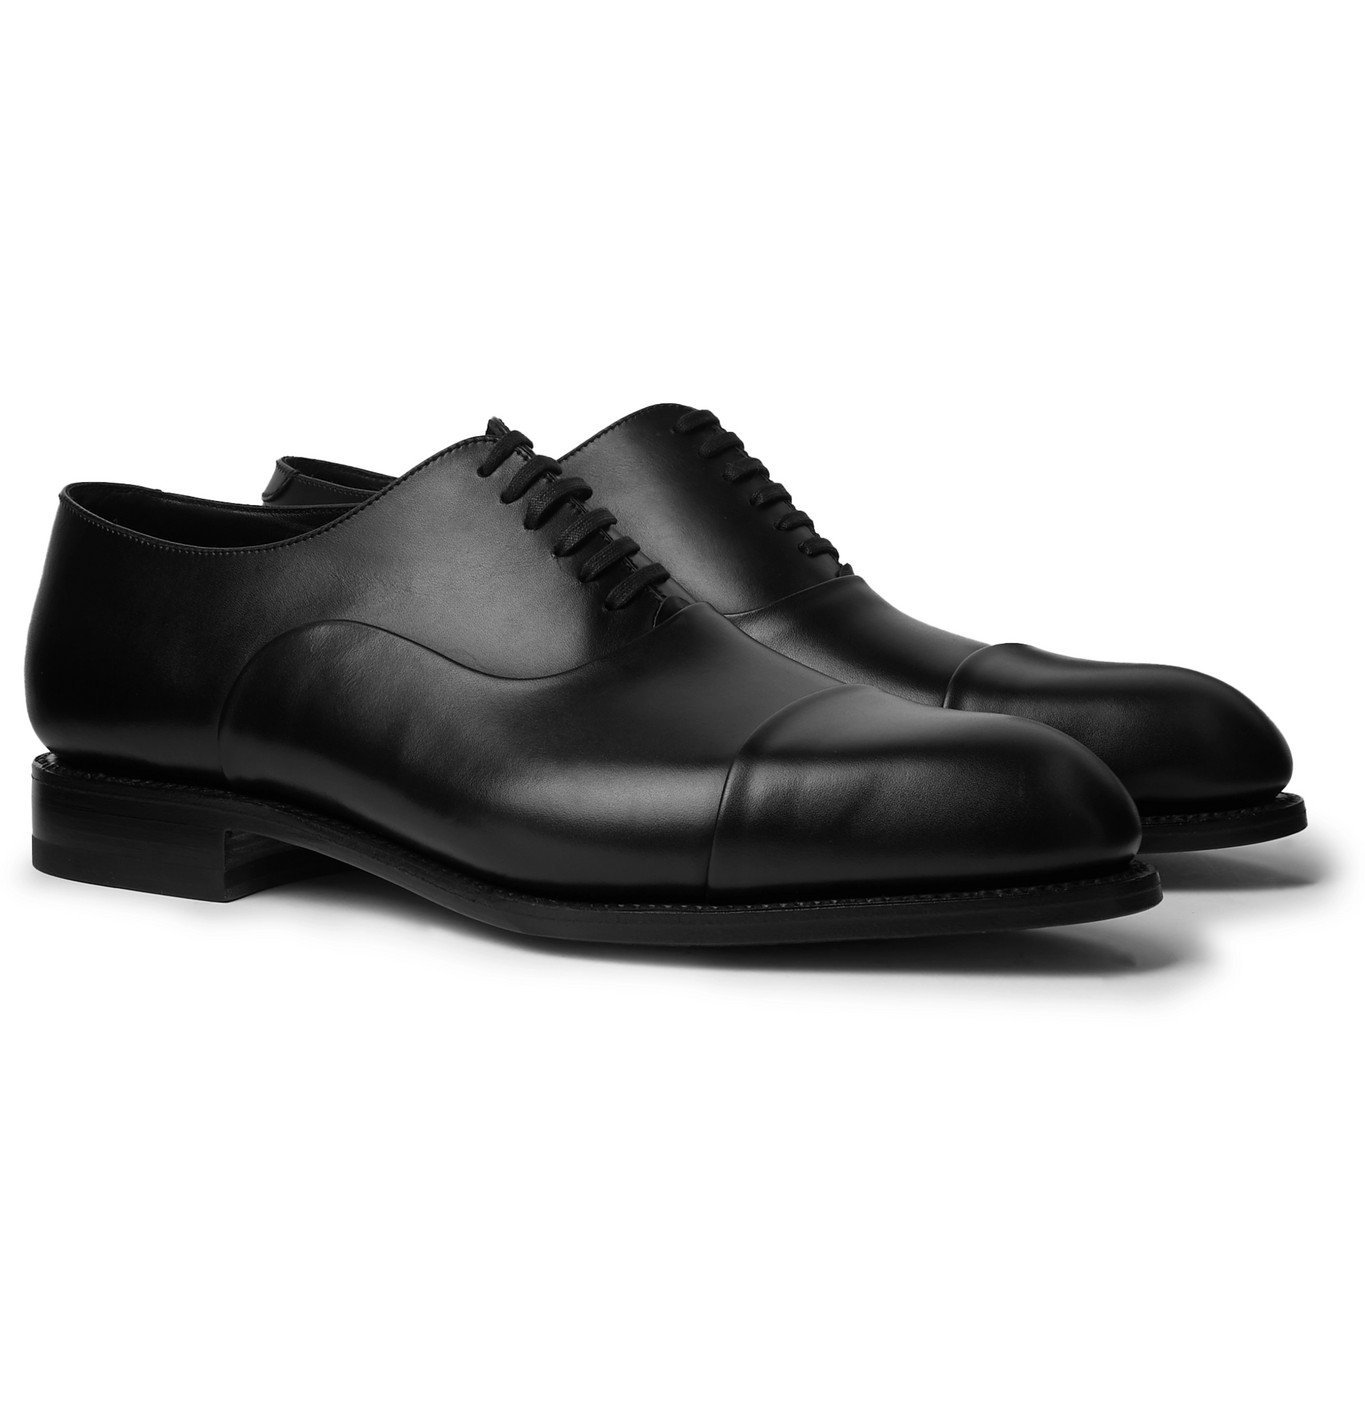 J.M. Weston - Leather Oxford Shoes - Black J.M. Weston